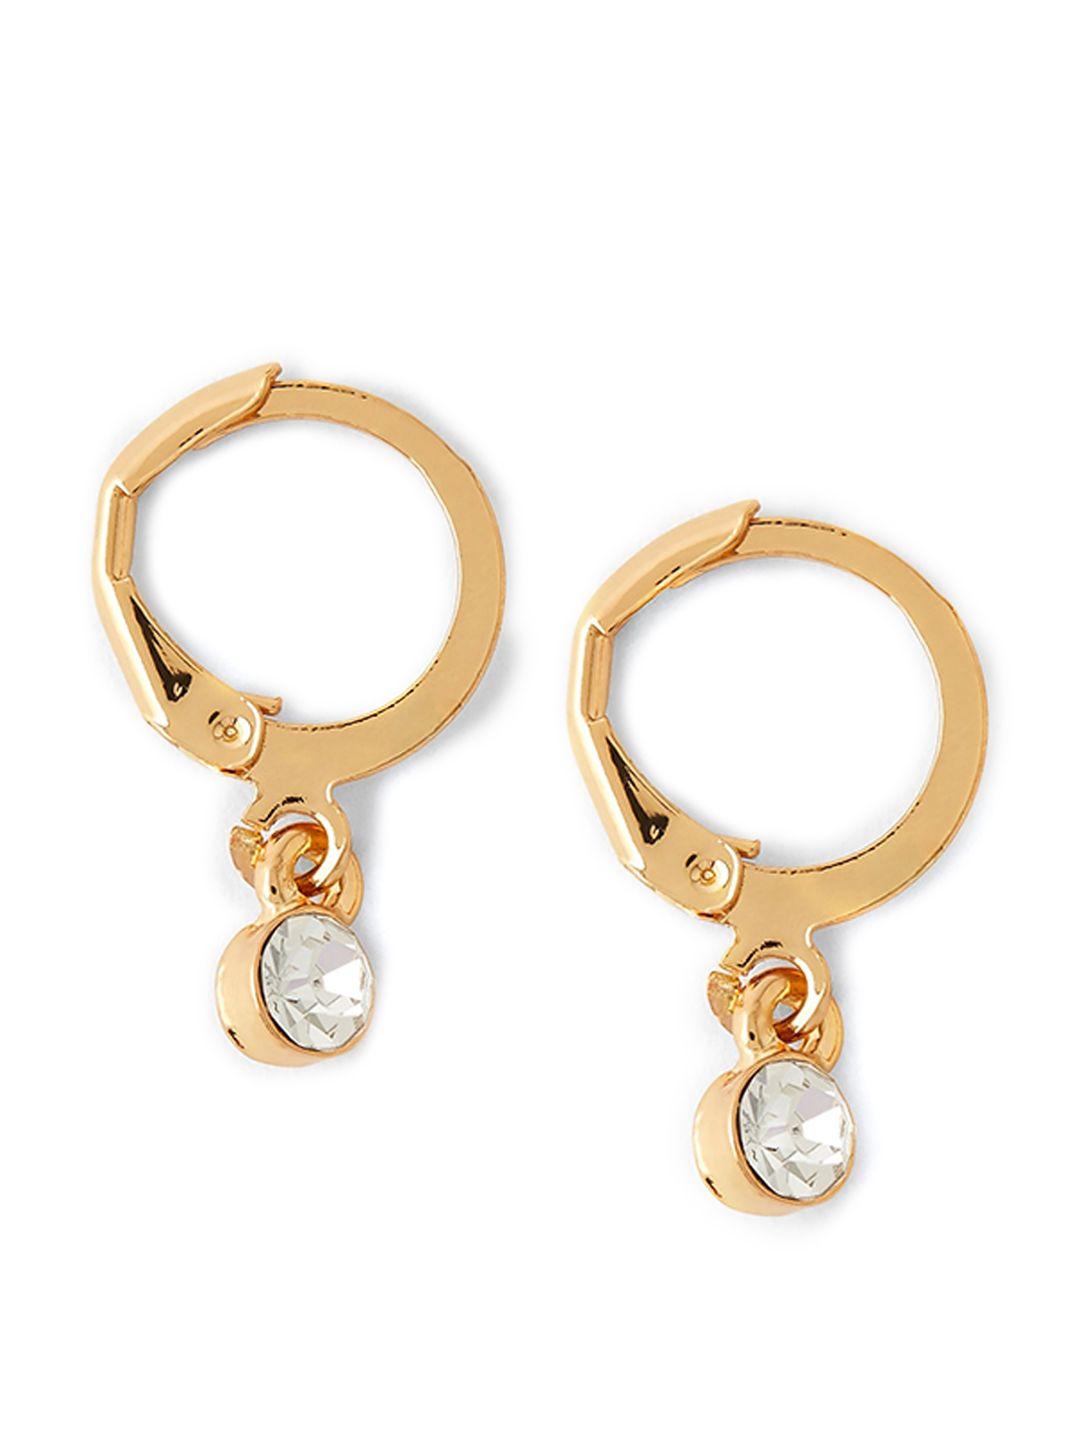 accessorize-london-transparent-contemporary-studs-earrings